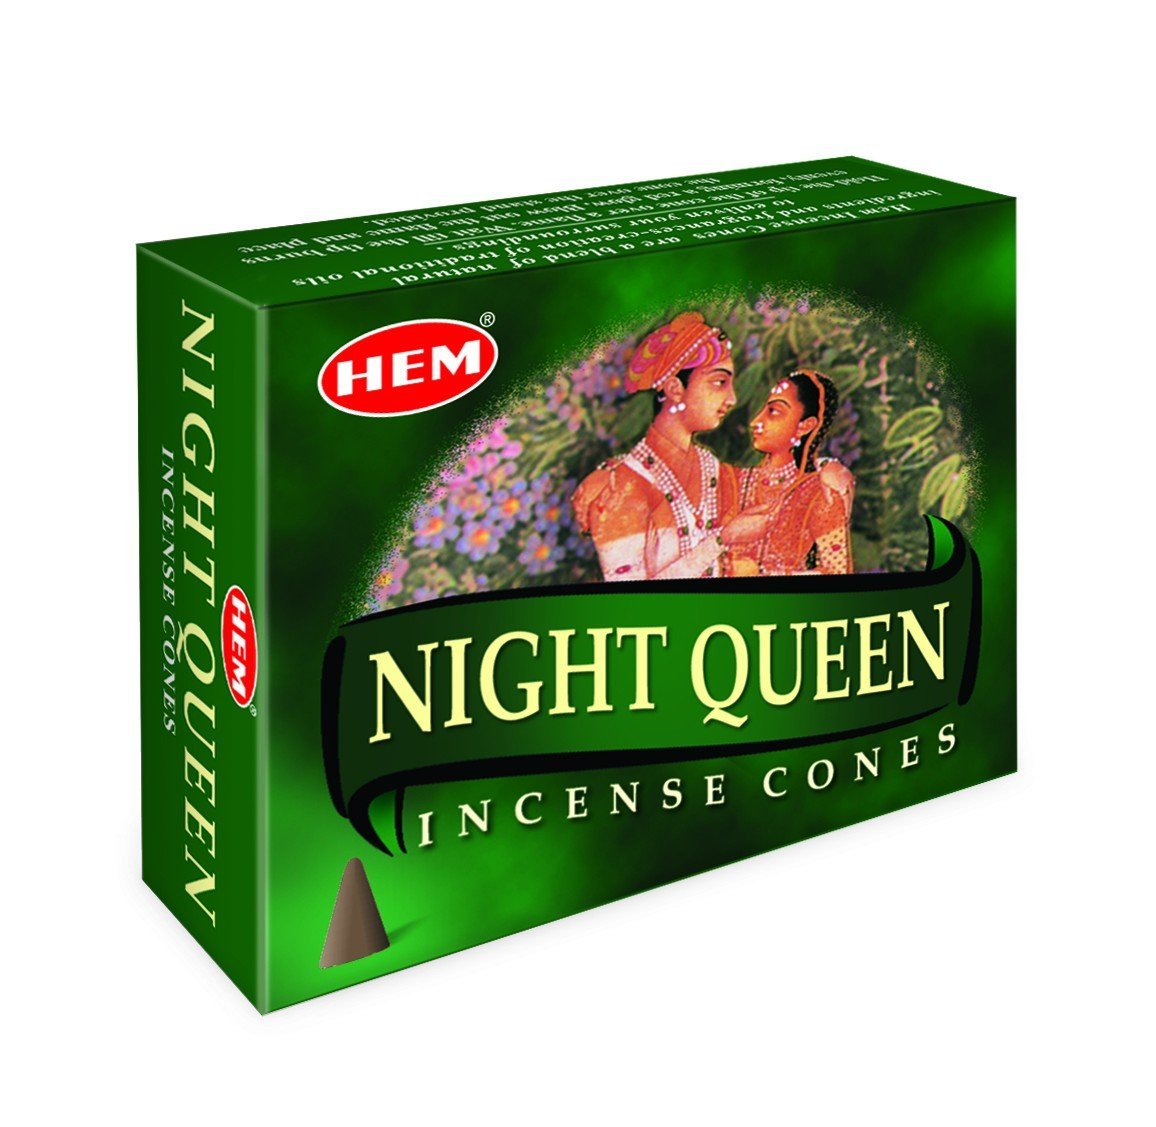 HEM - Night Queen - 120 Incense Cones